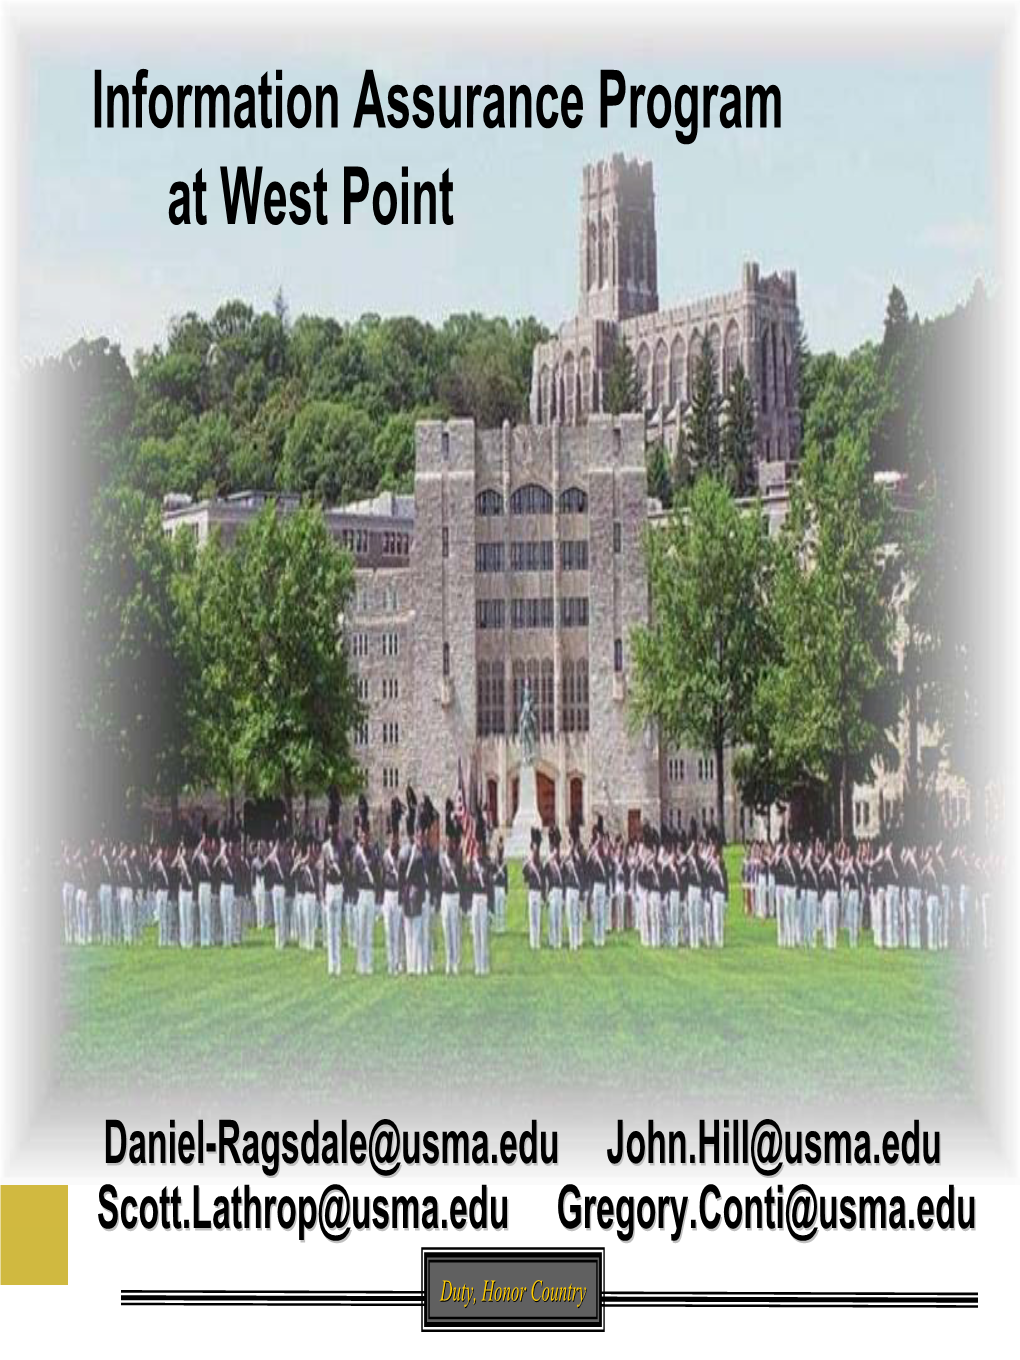 Information Assurance Program at West Point